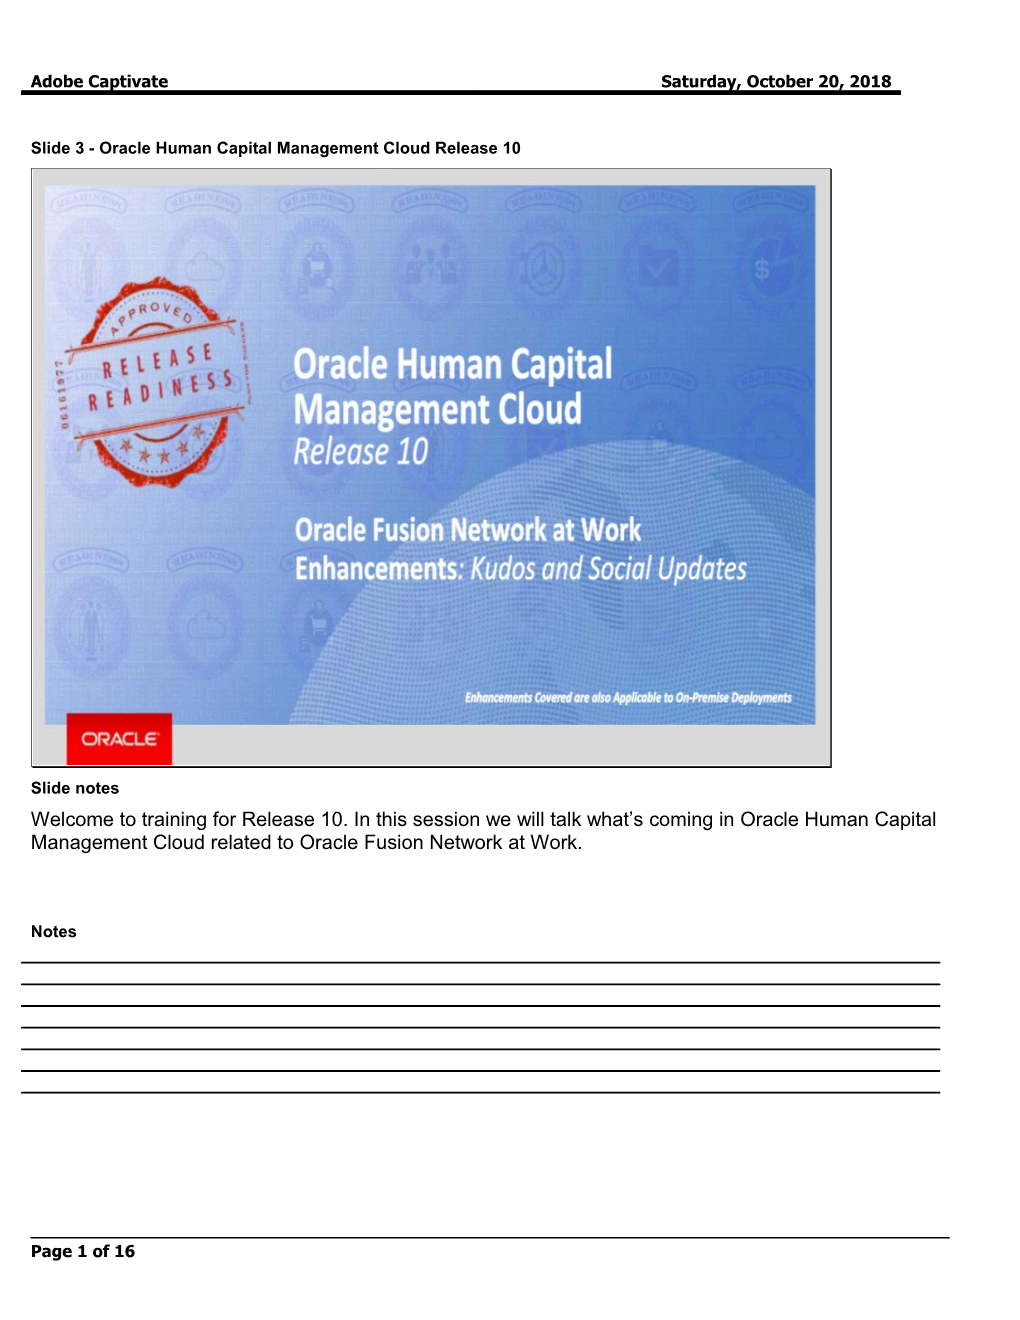 Slide 3 - Oracle Human Capital Management Cloud Release 10